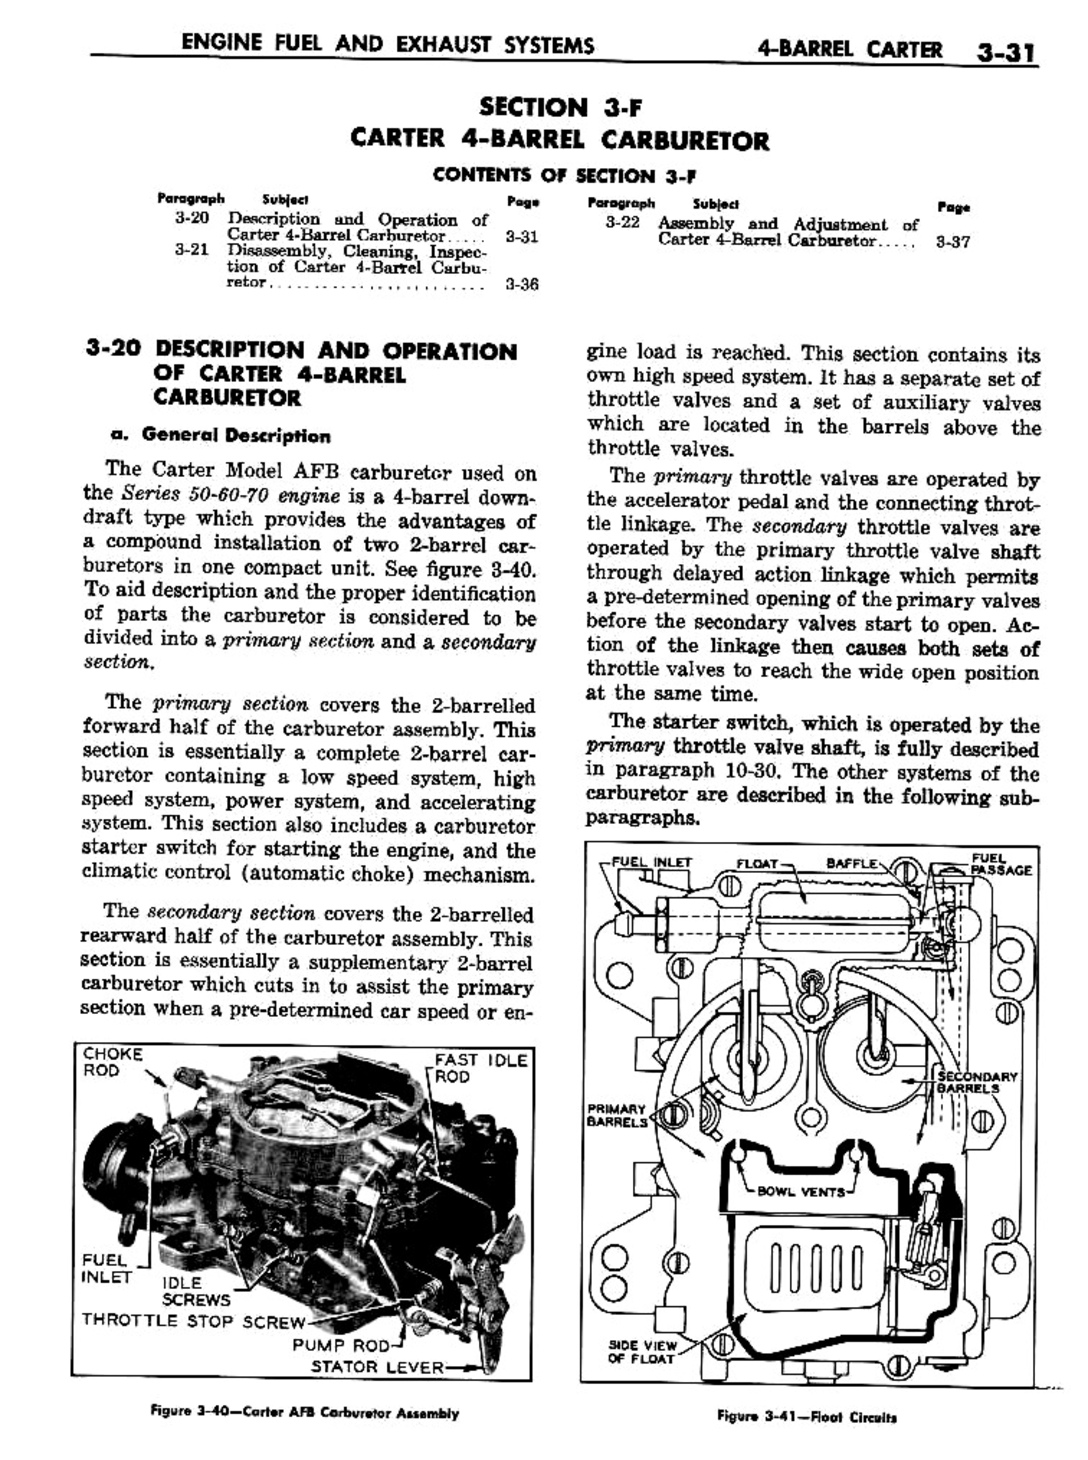 n_04 1957 Buick Shop Manual - Engine Fuel & Exhaust-031-031.jpg